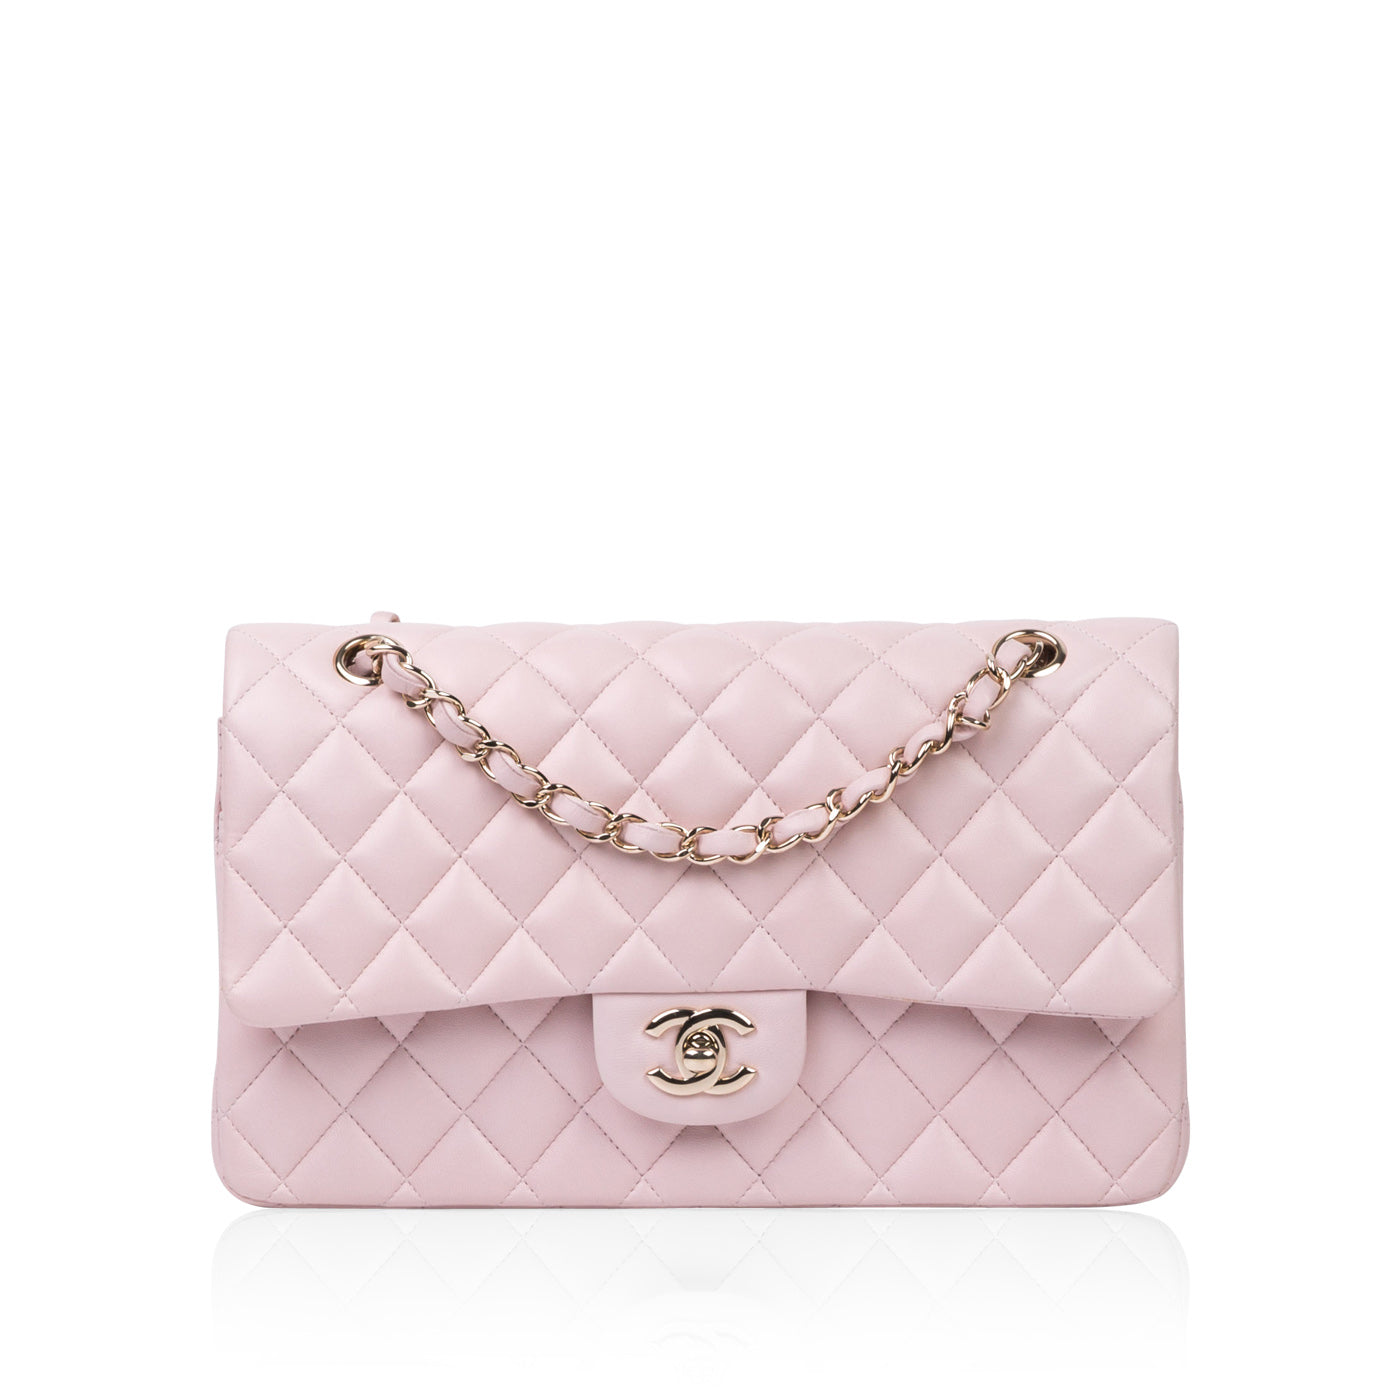 Túi Chanel Handbags Mini Flap Bag màu hồng da cừu best quality